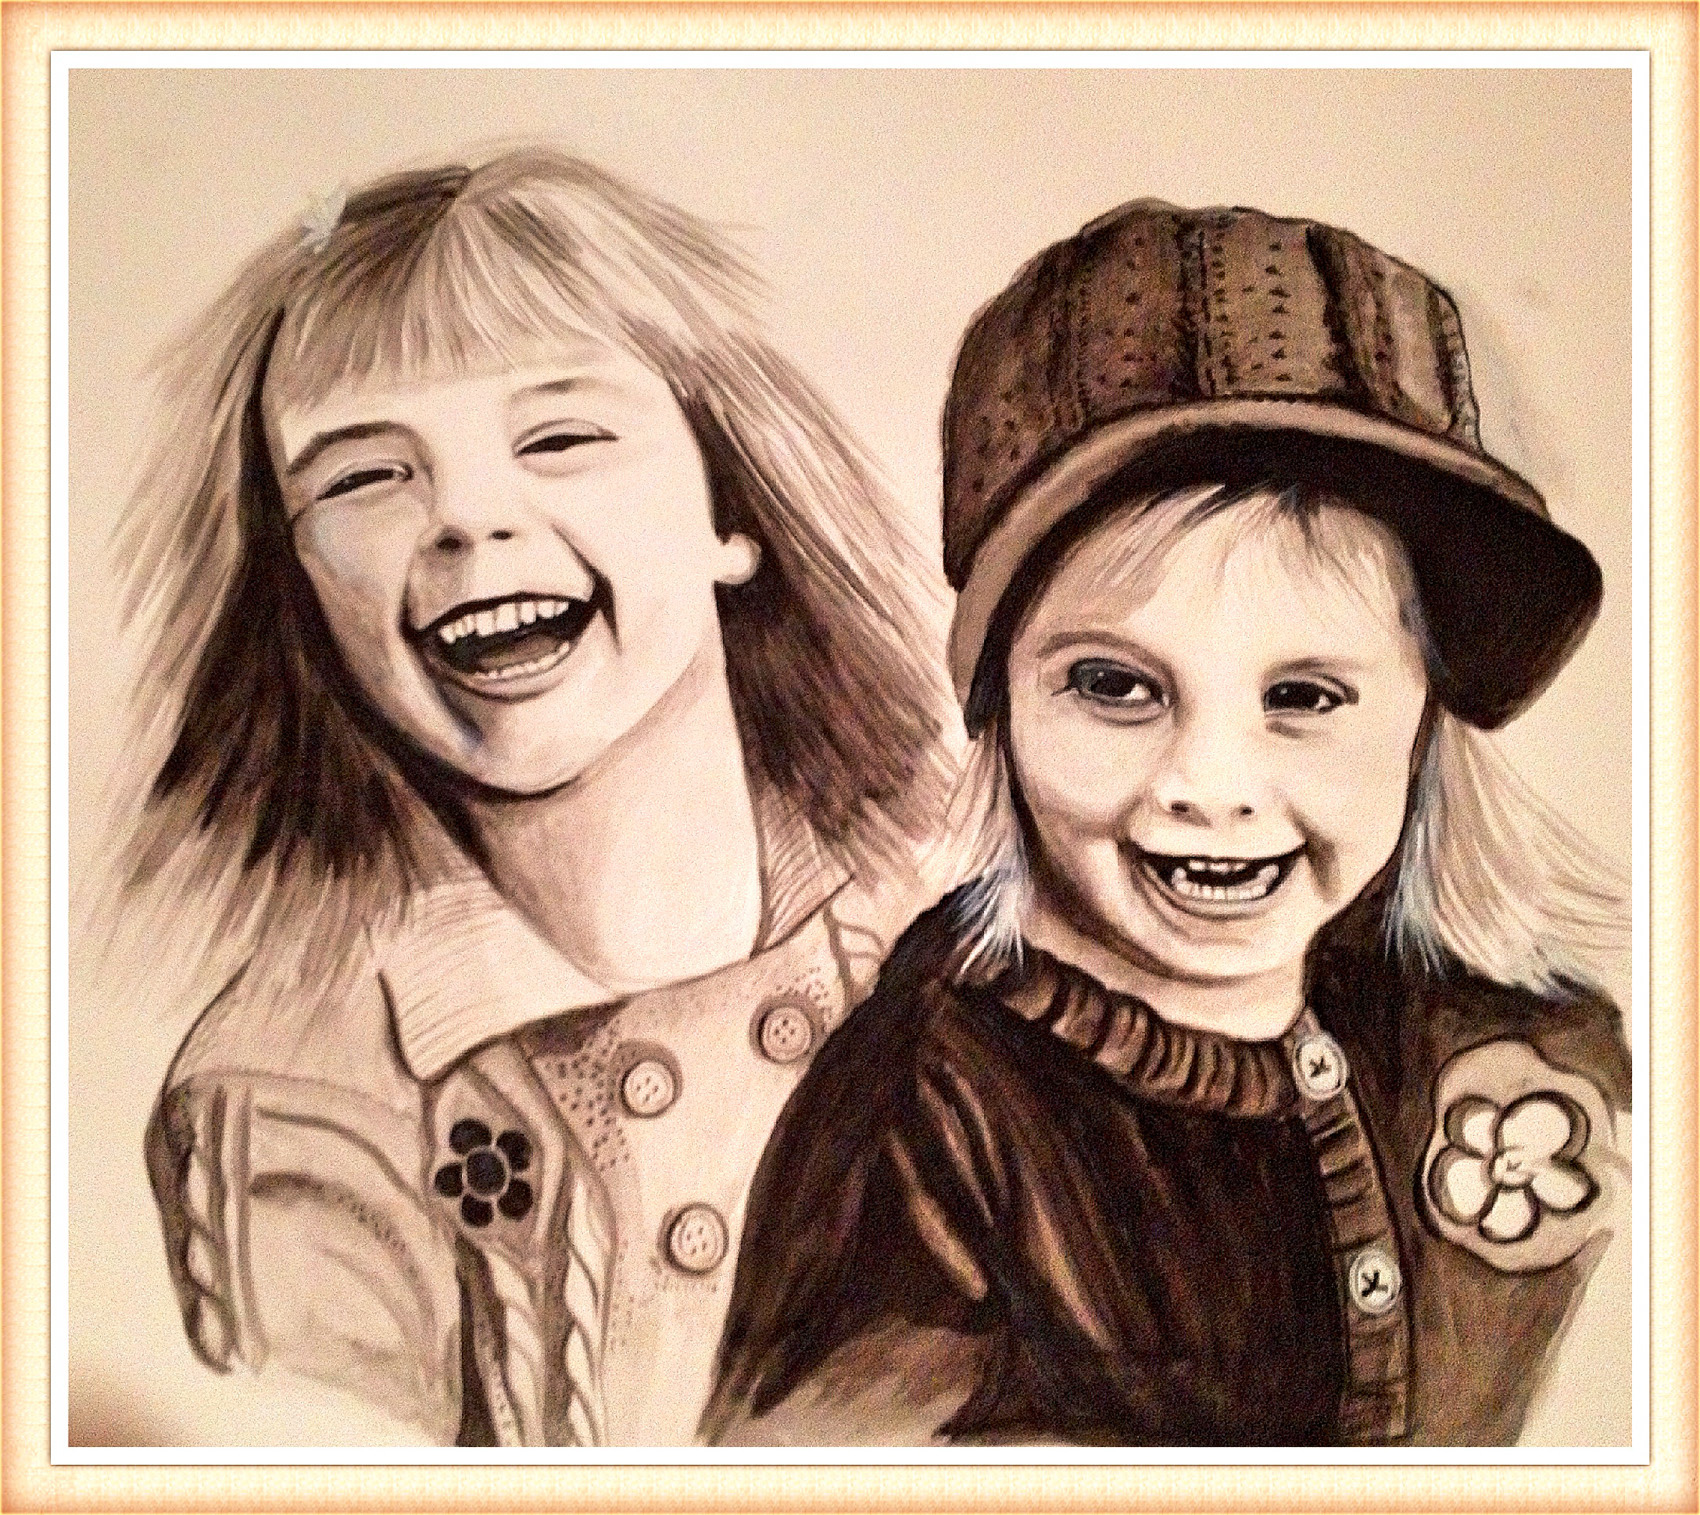 Portrait of 2 small girls